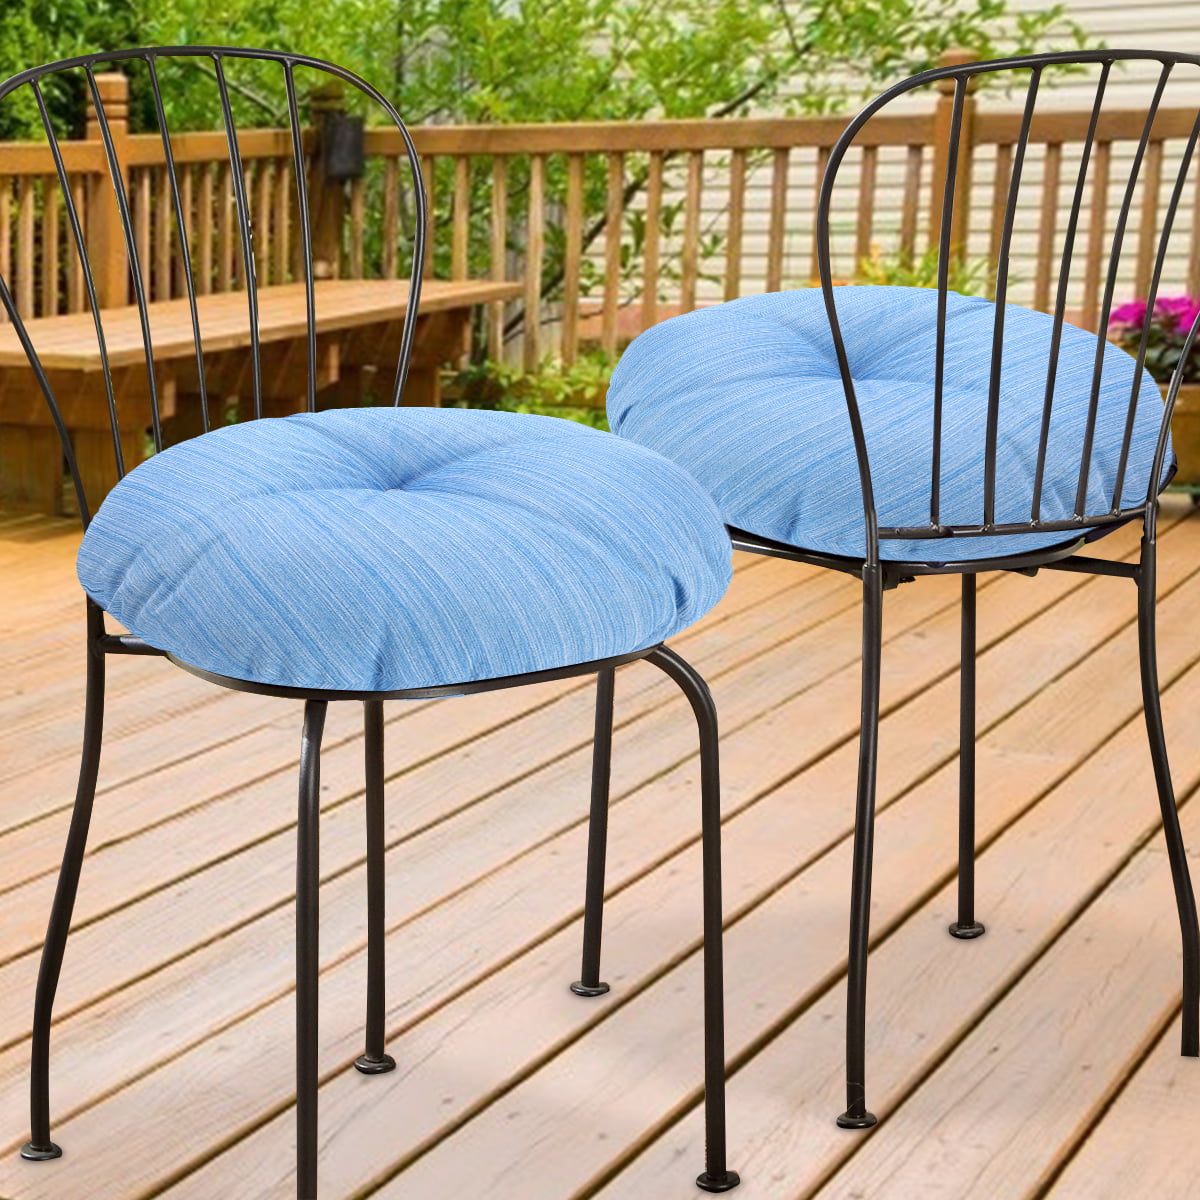 Indoor Dining Garden Patio Home Kitchen Round Chair Cushion Pads Seat Decor X2G5 